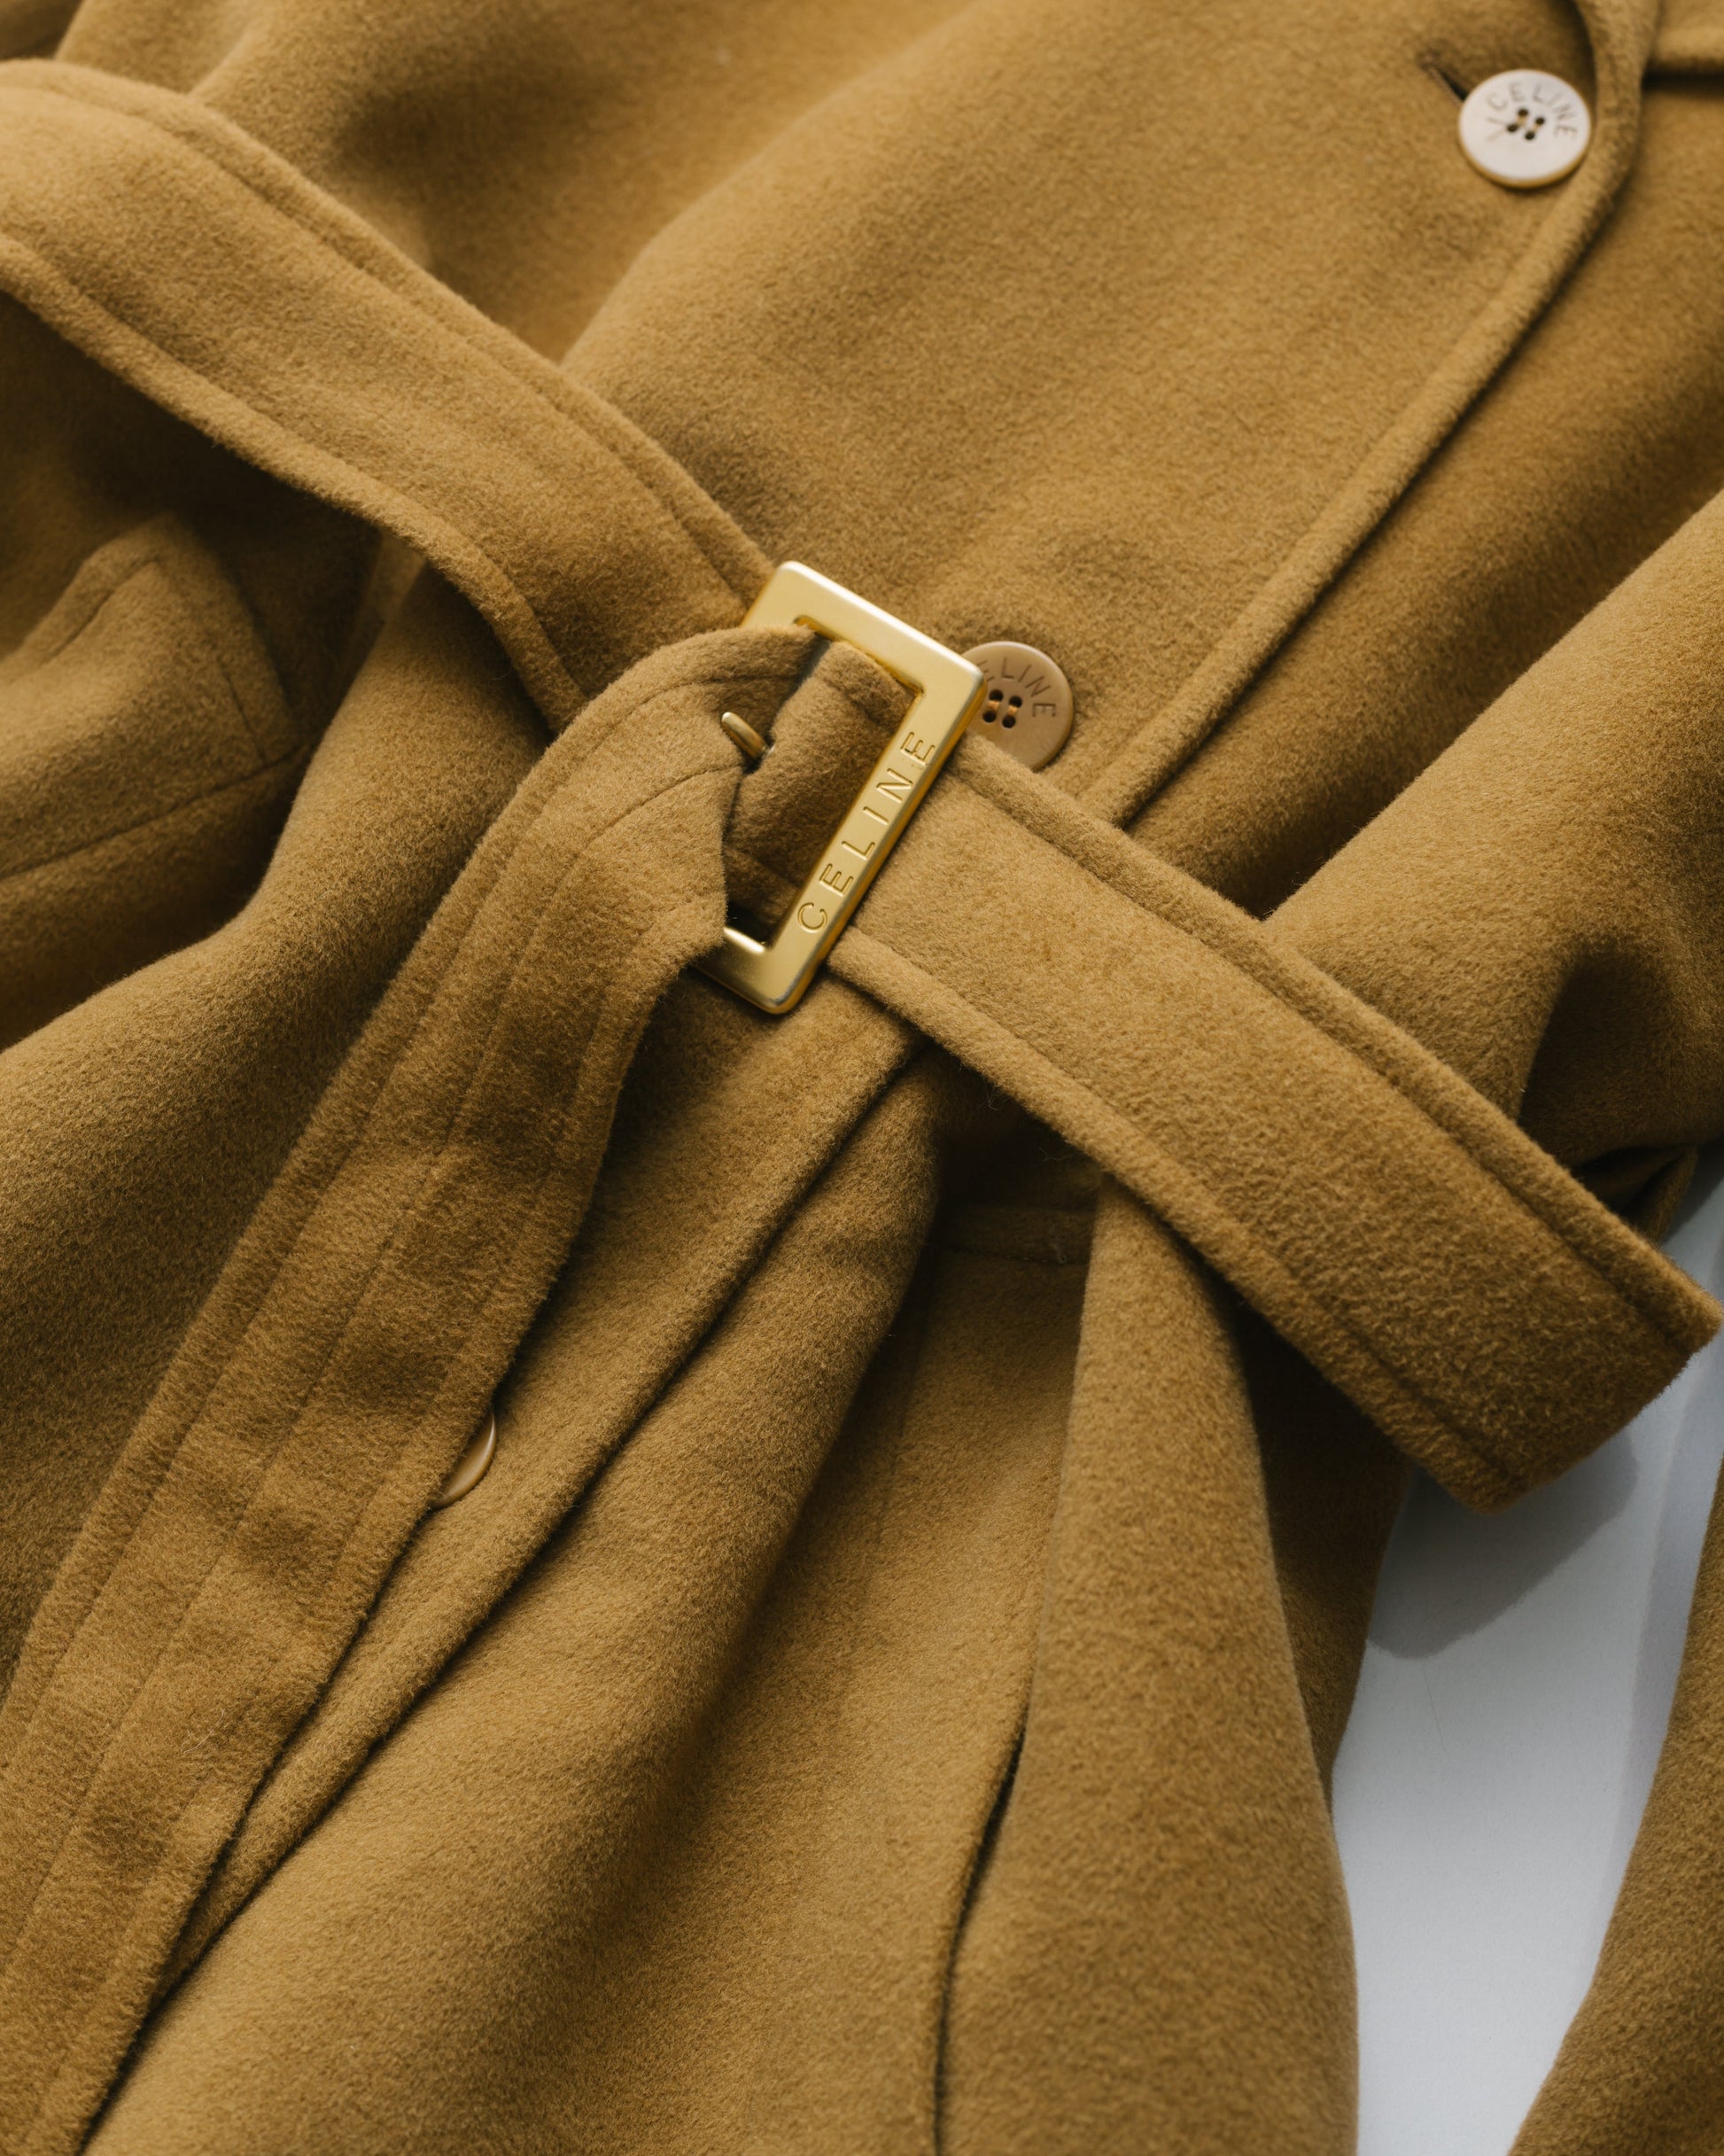 Celine wool & cashmere coat